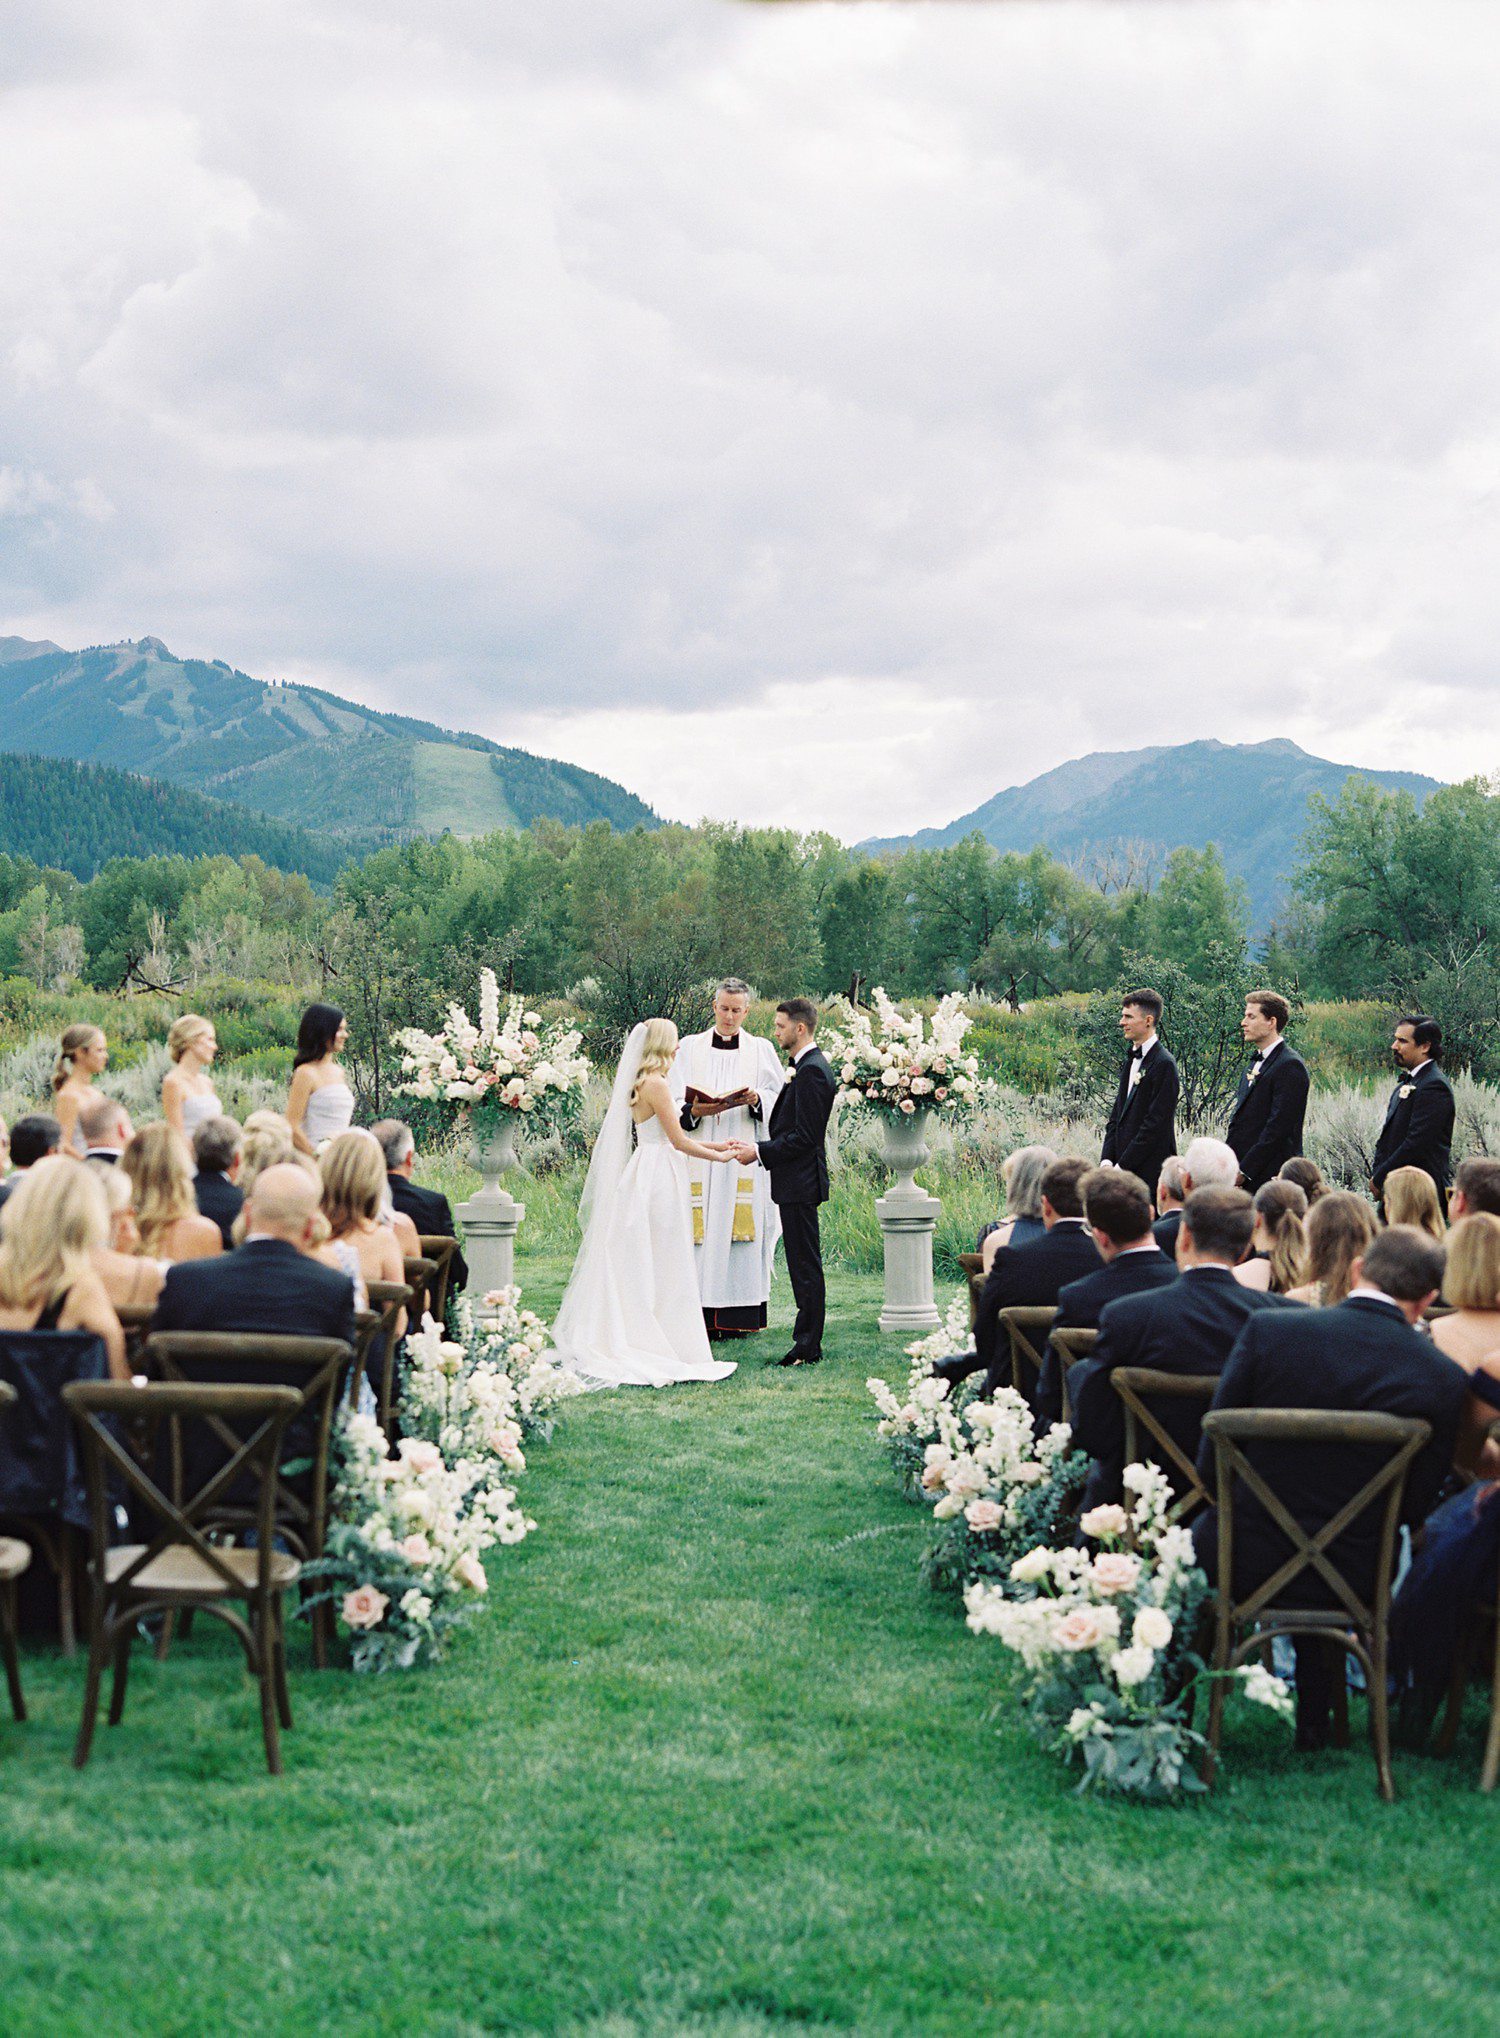 Wedding ceremony at Aspen Meadows Resort. 